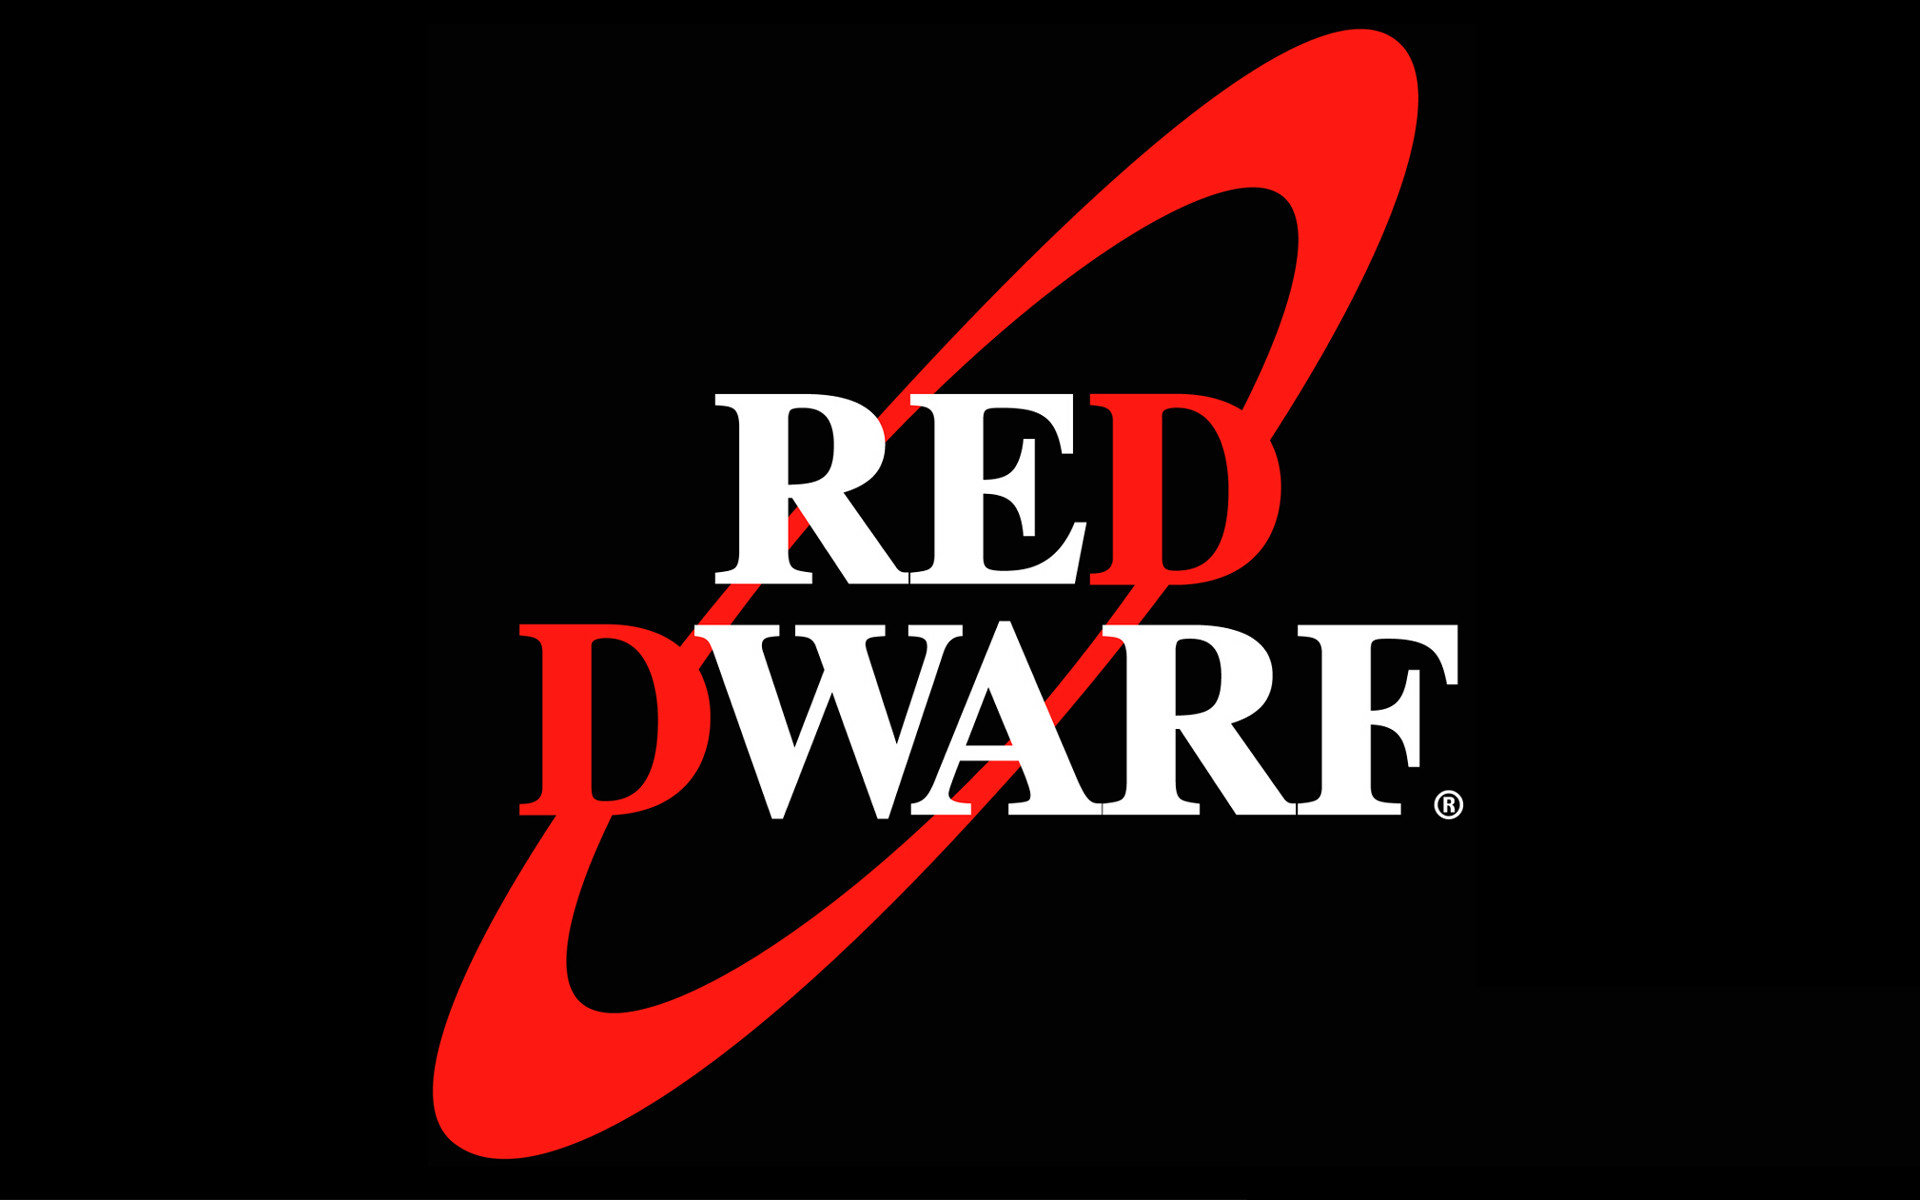 Red Dwarf wallpapers HD for desktop backgrounds